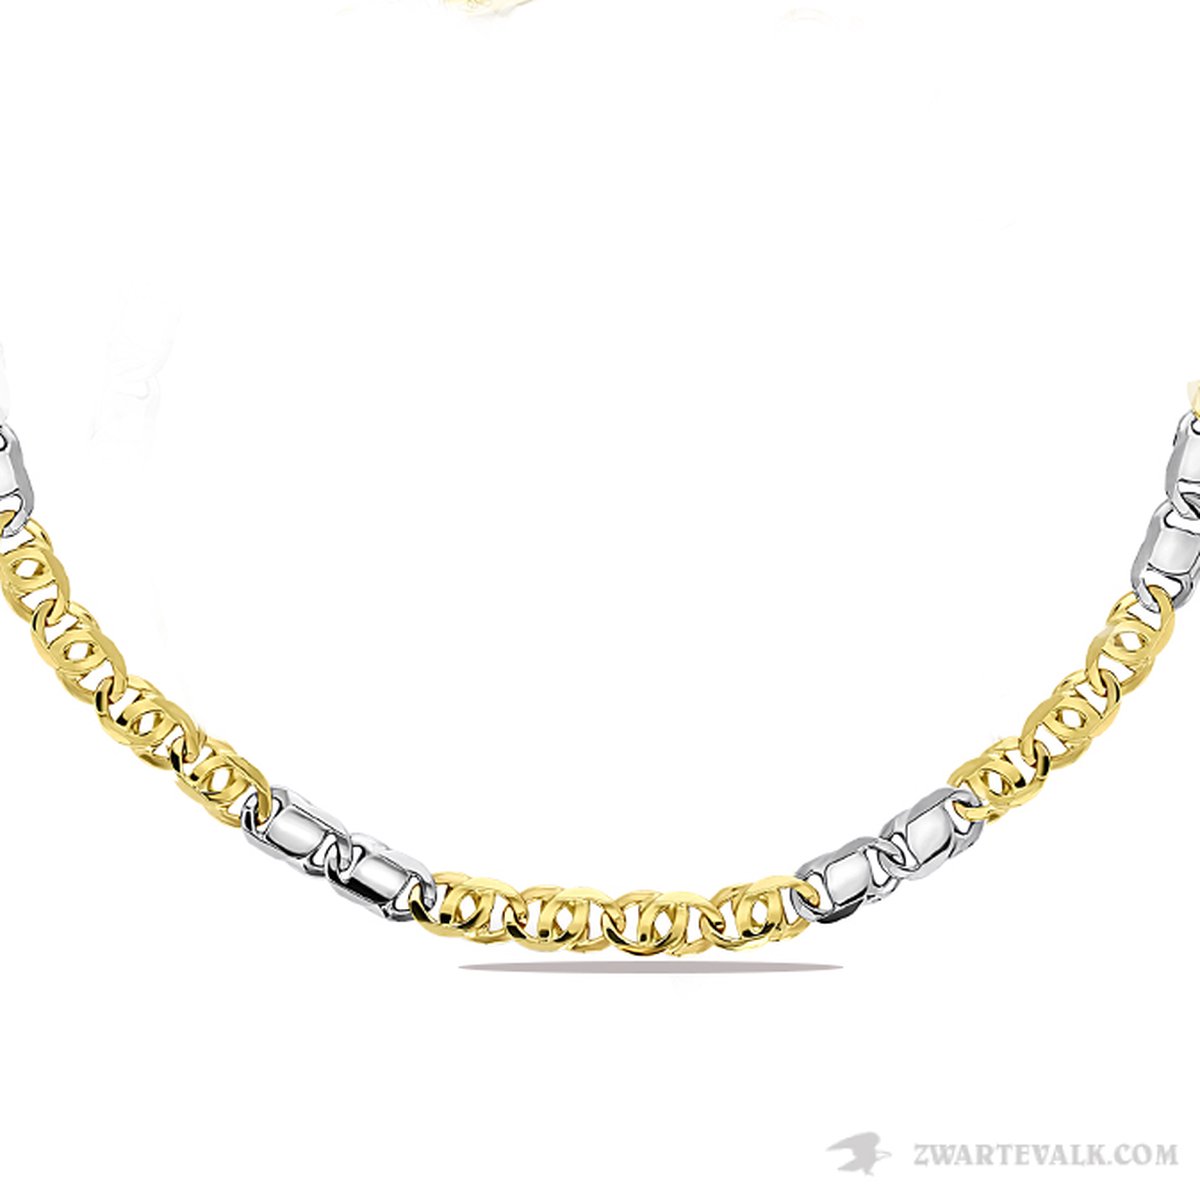 Juwelier Zwartevalk - 14 karaat gouden bicolor ketting BF 1174/50cm